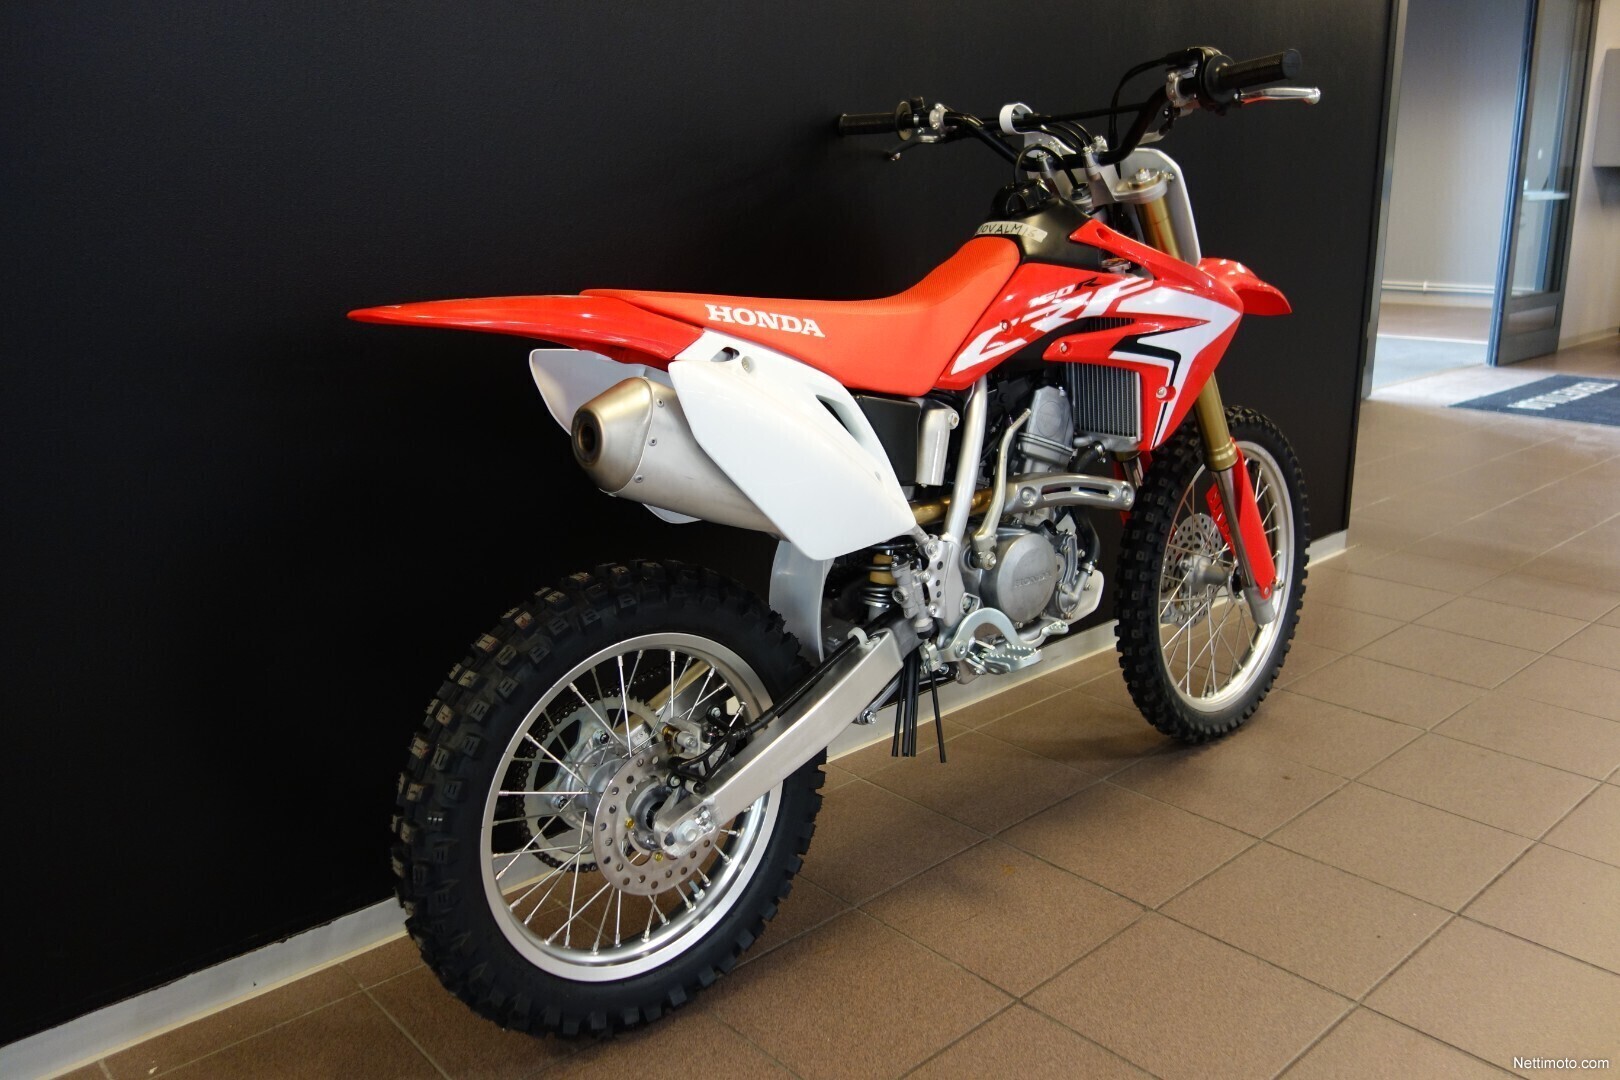 Honda CRF 150 R 150 cm³ 2020 Raahe Moottoripyörä